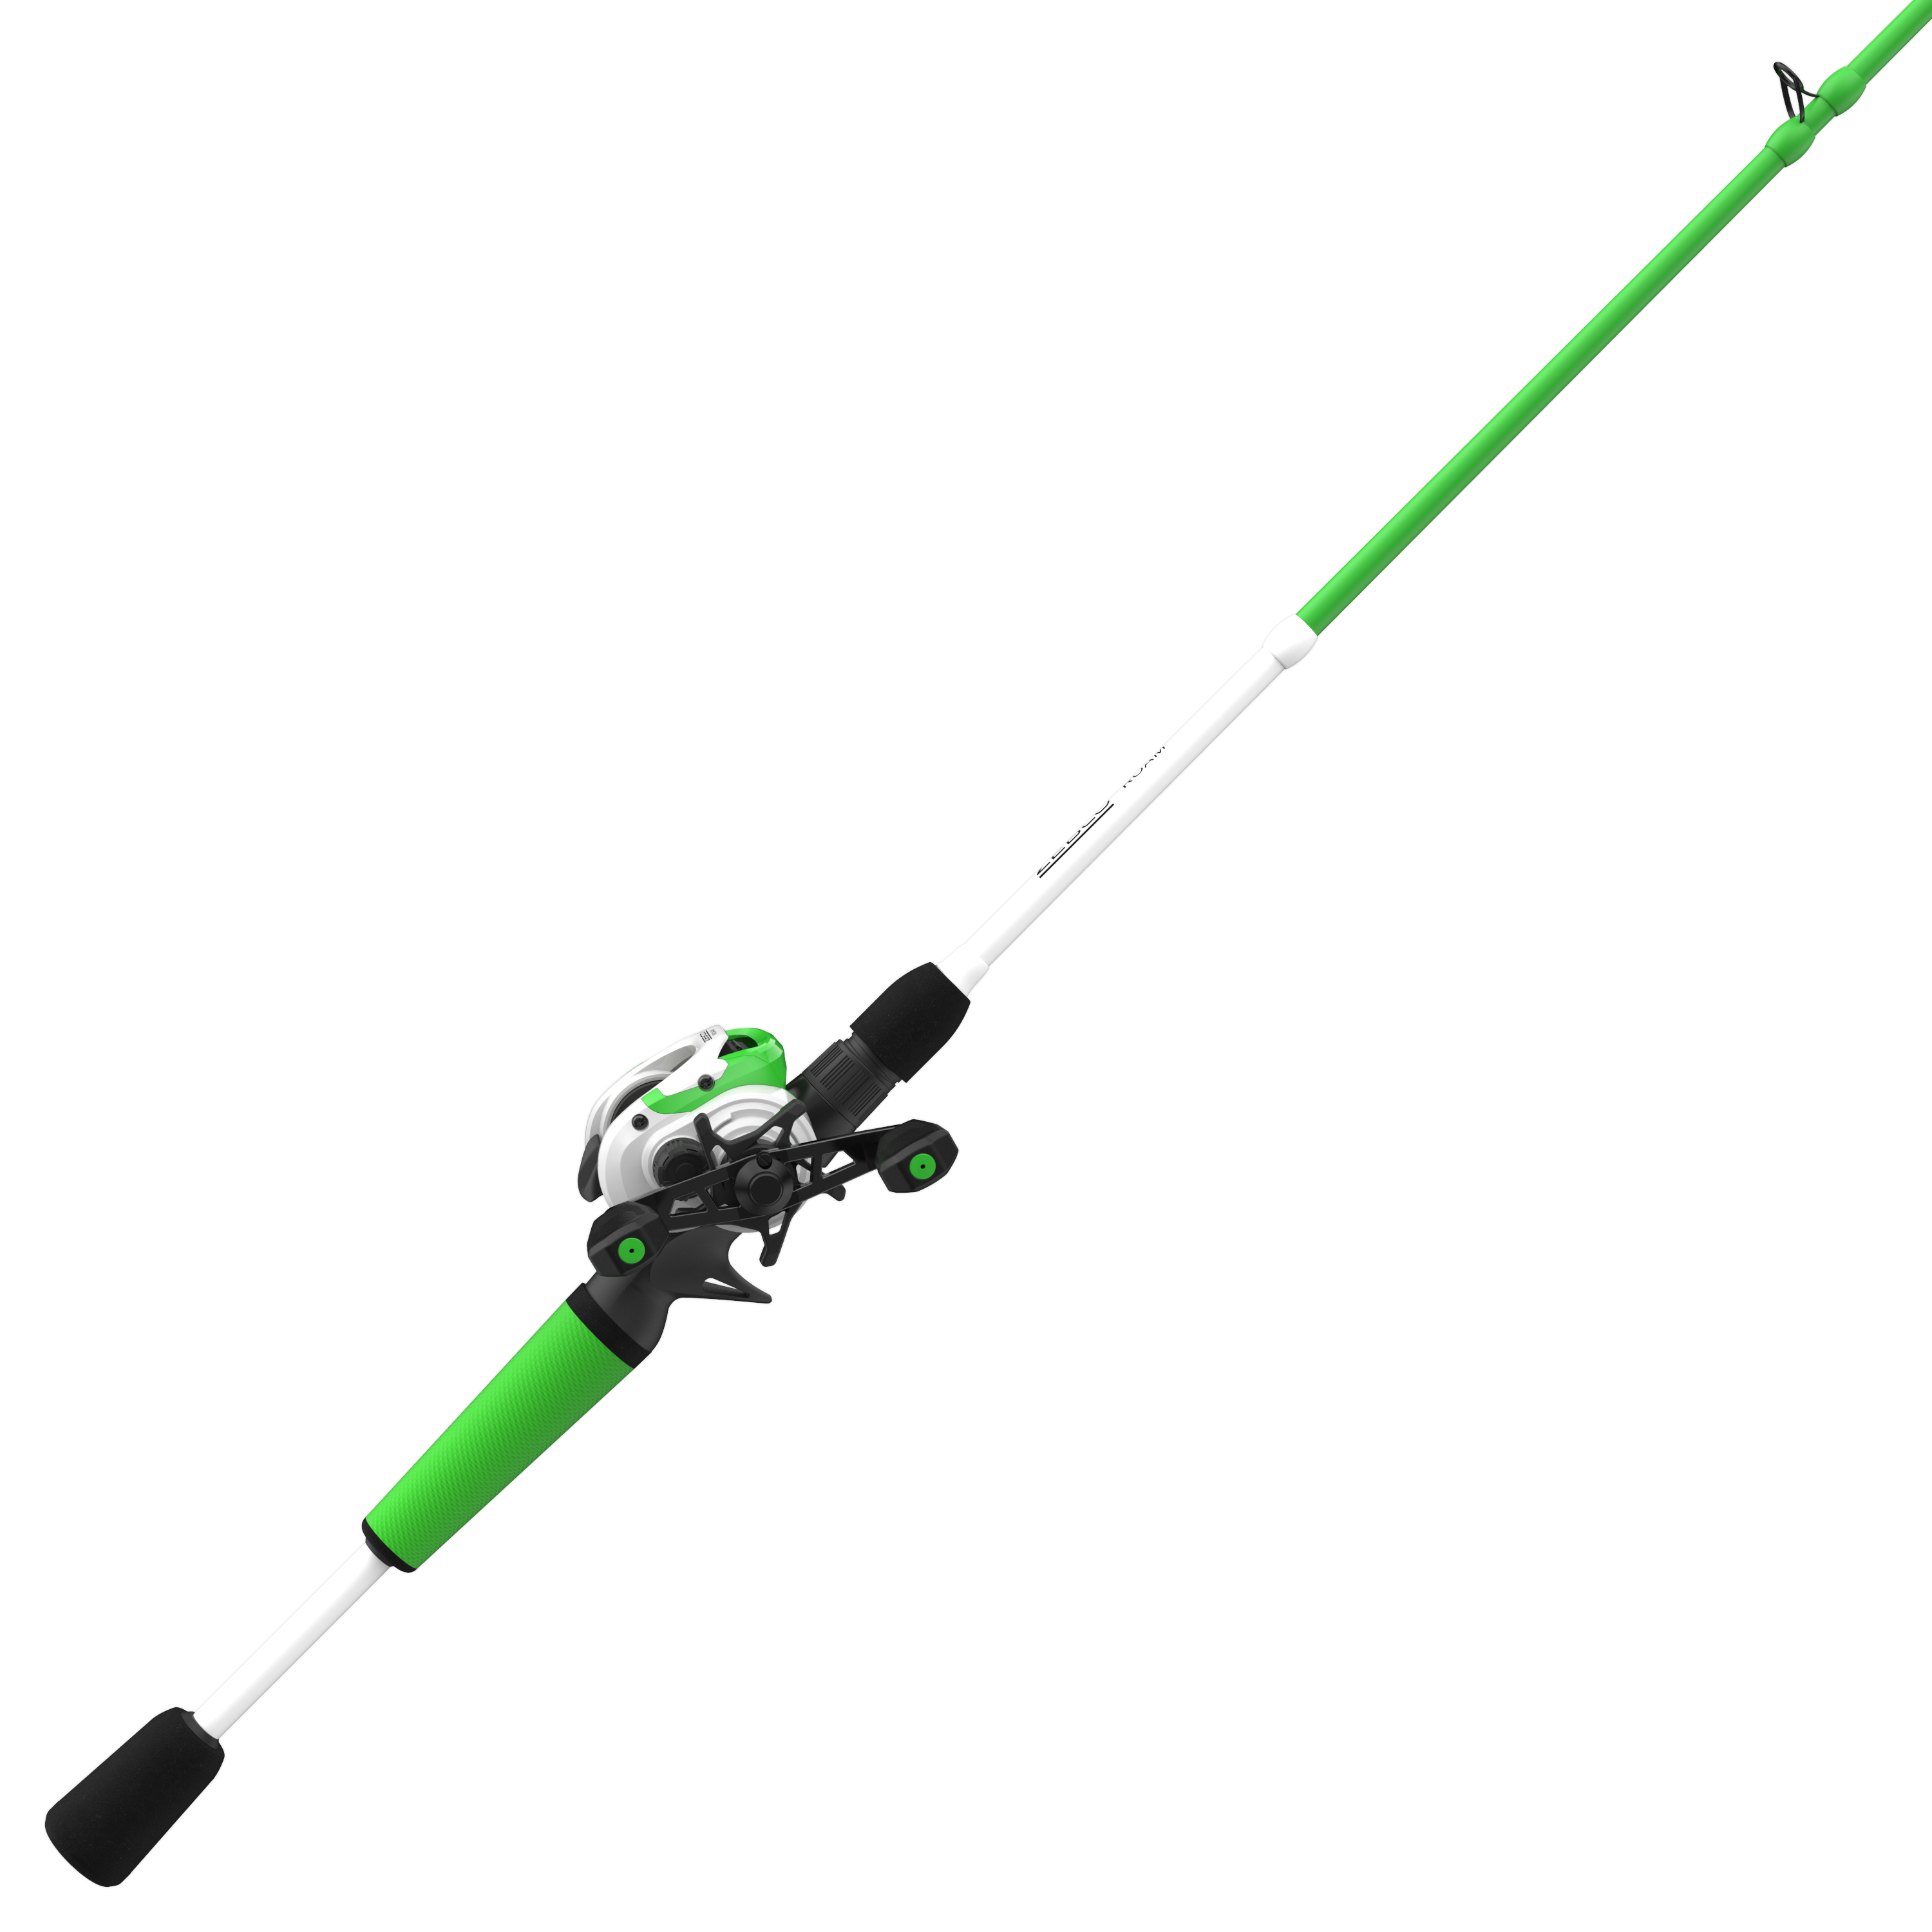 Zebco Big Cat XT Spincast Fishing Reel, Size 80 Reel, Changeable